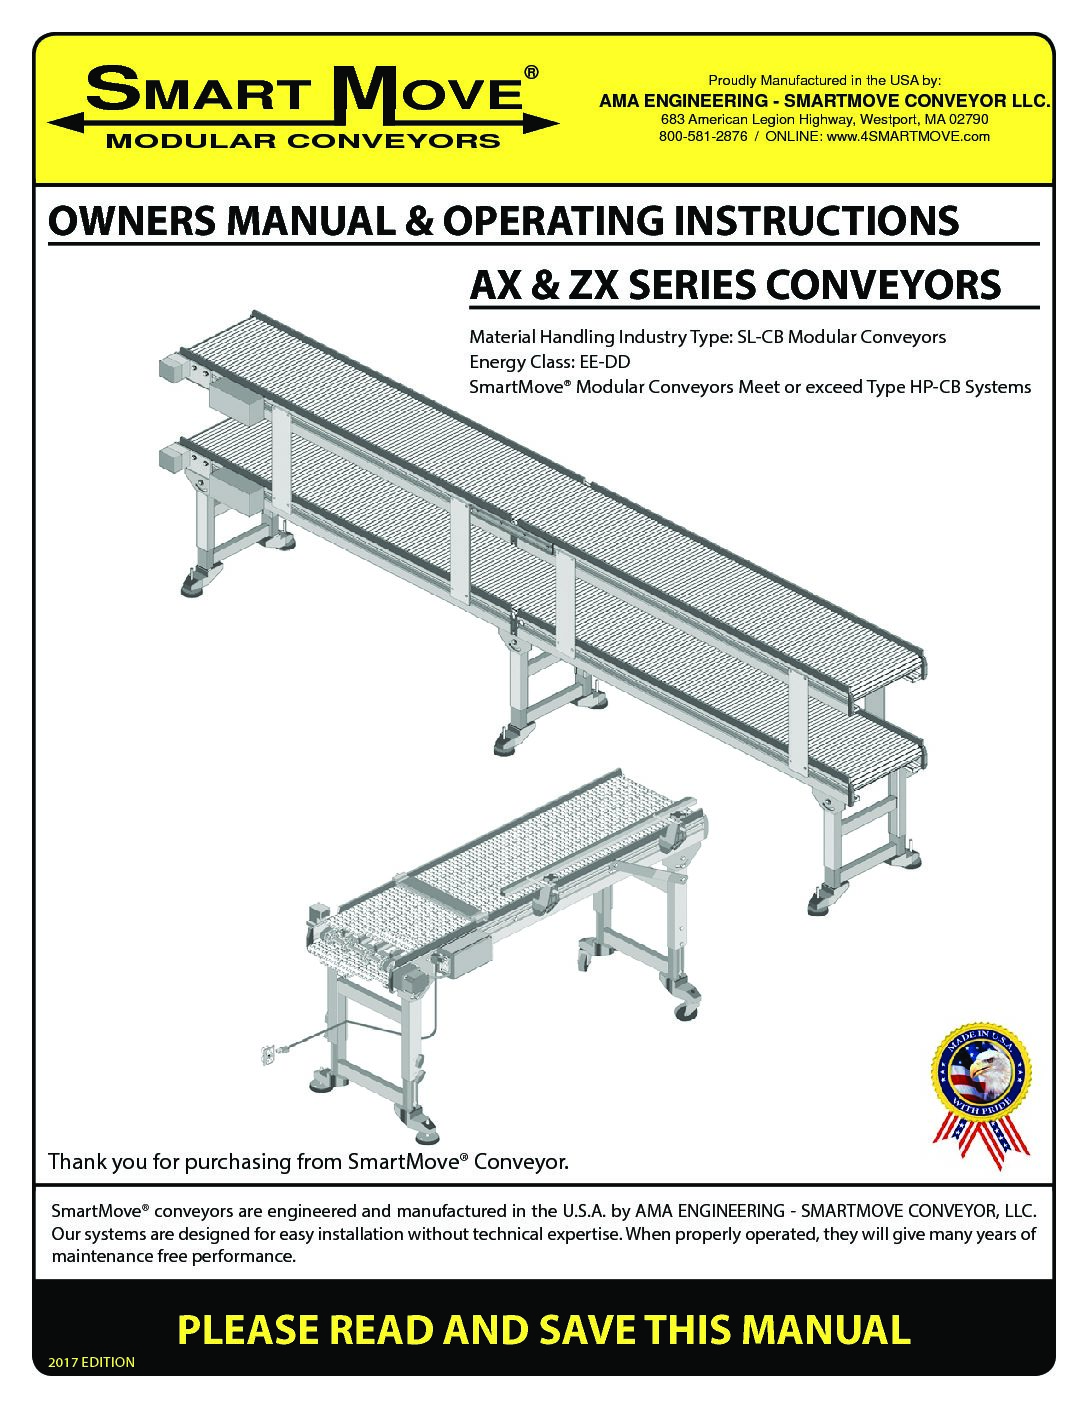 2017 Conveyor Manual 7-11-17